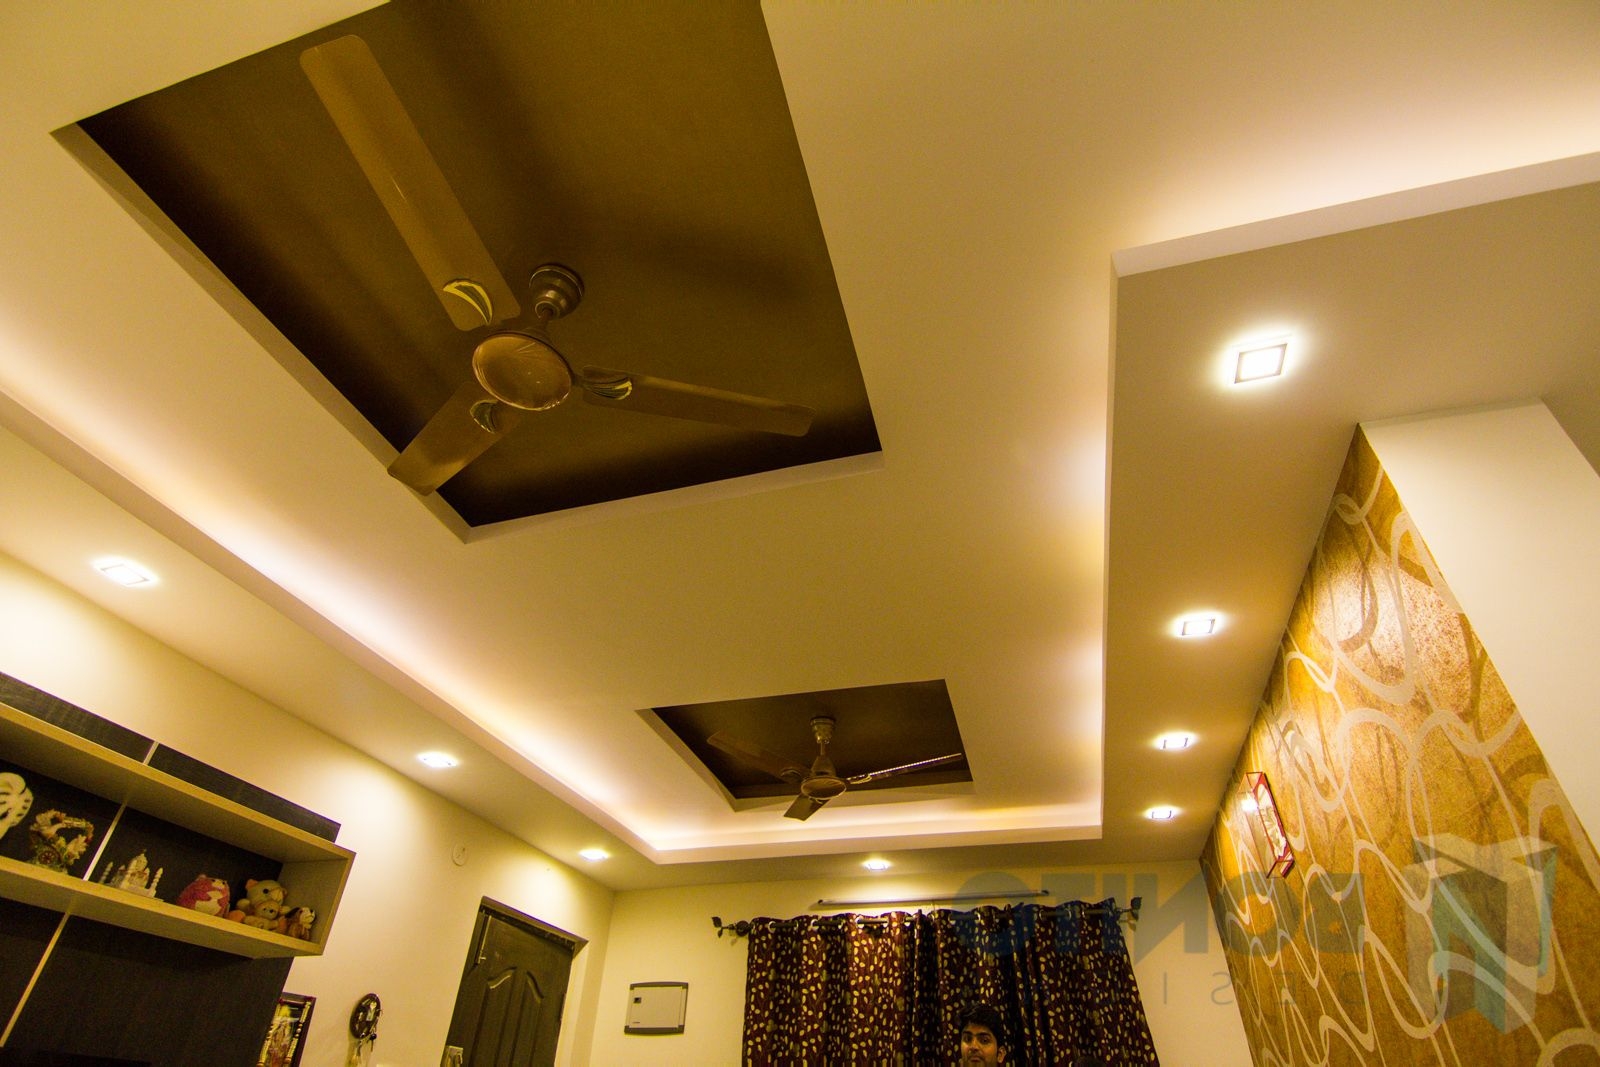 8 Images False Ceiling Design With 2 Fans And View Alqu Blog